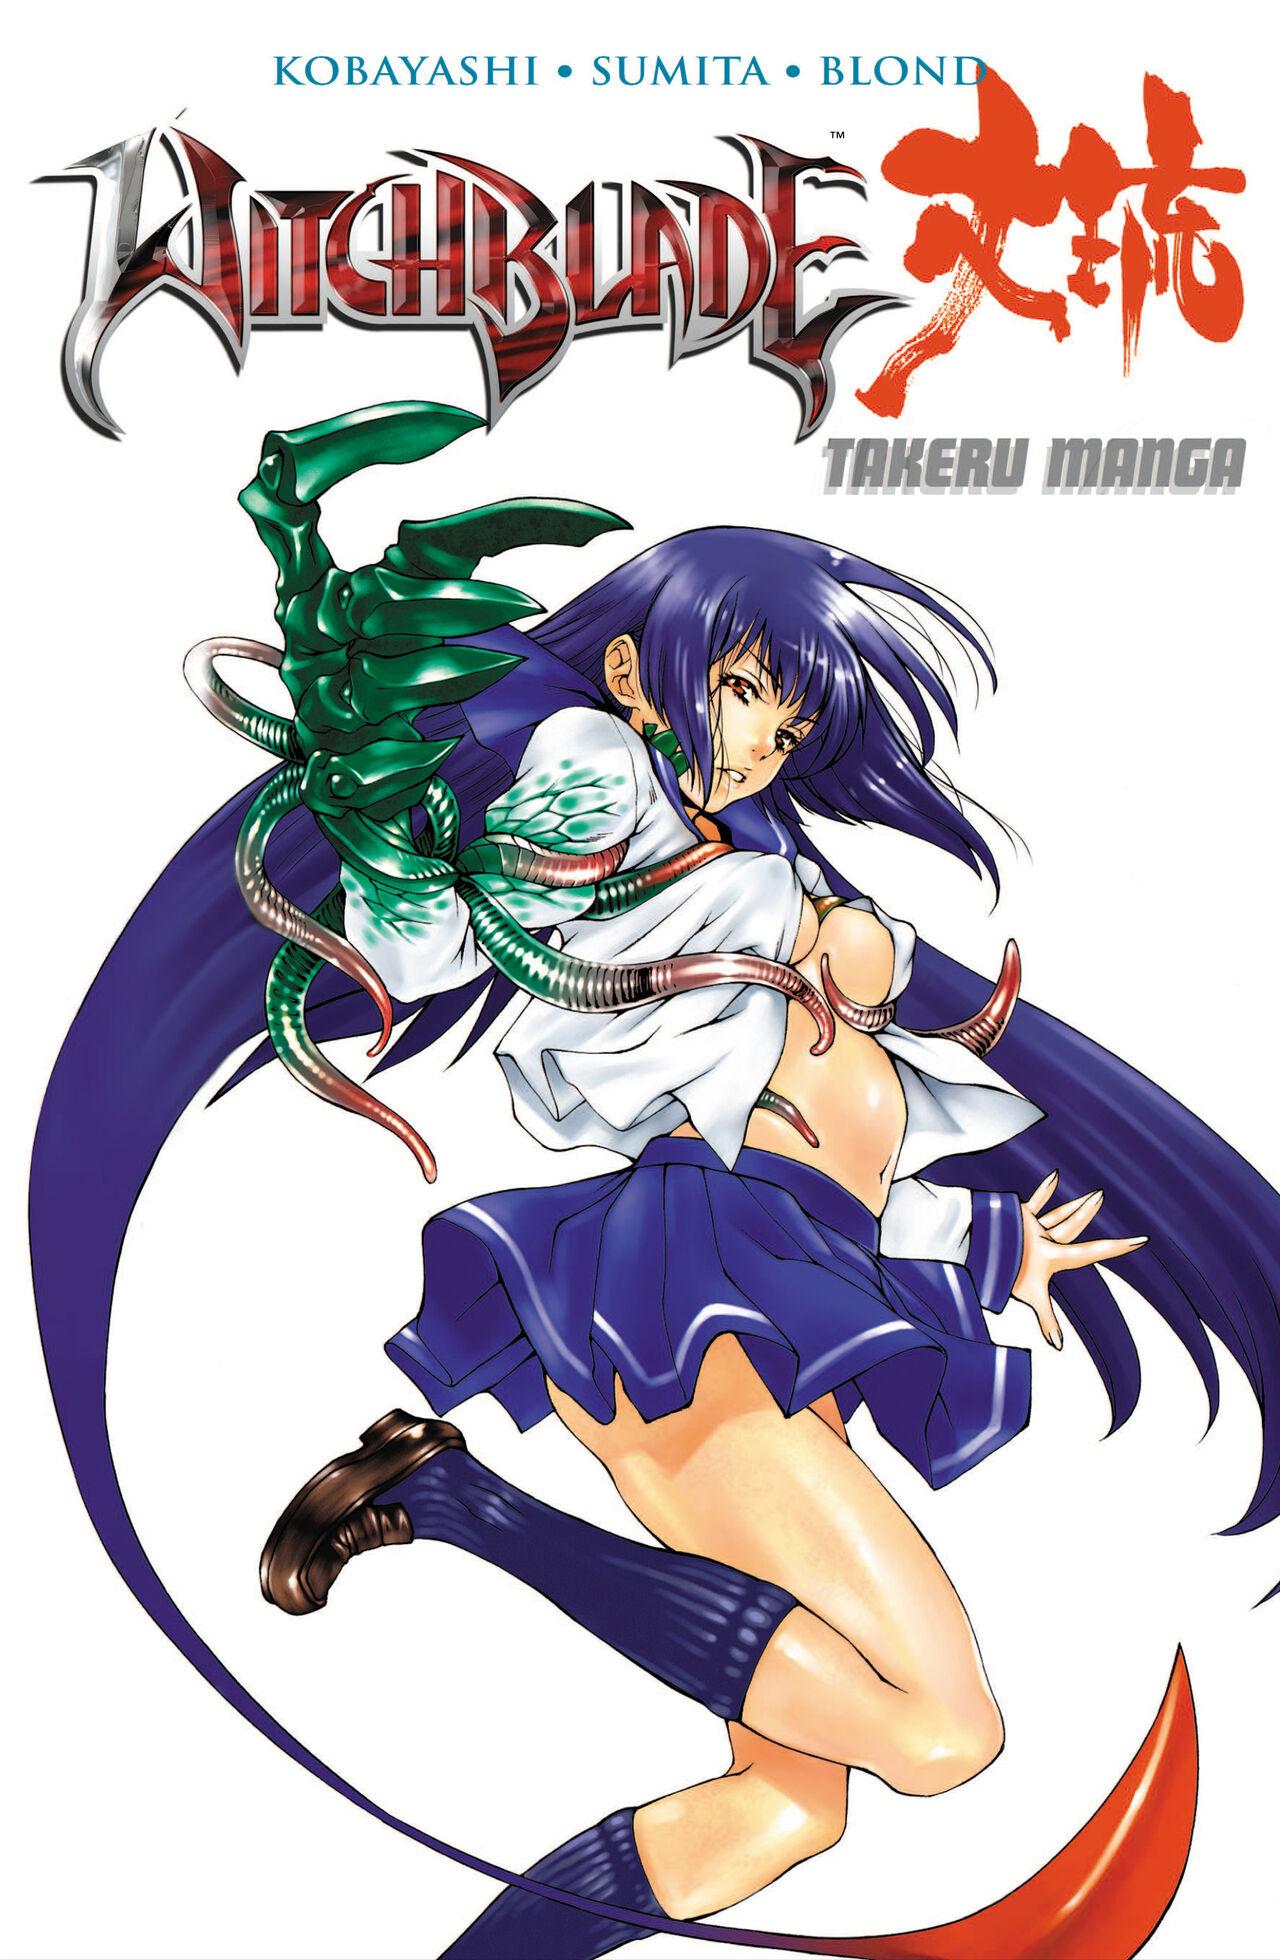 Newbie Witchblade: Takeru Manga - Witchblade Supernatural Para - Picture 1